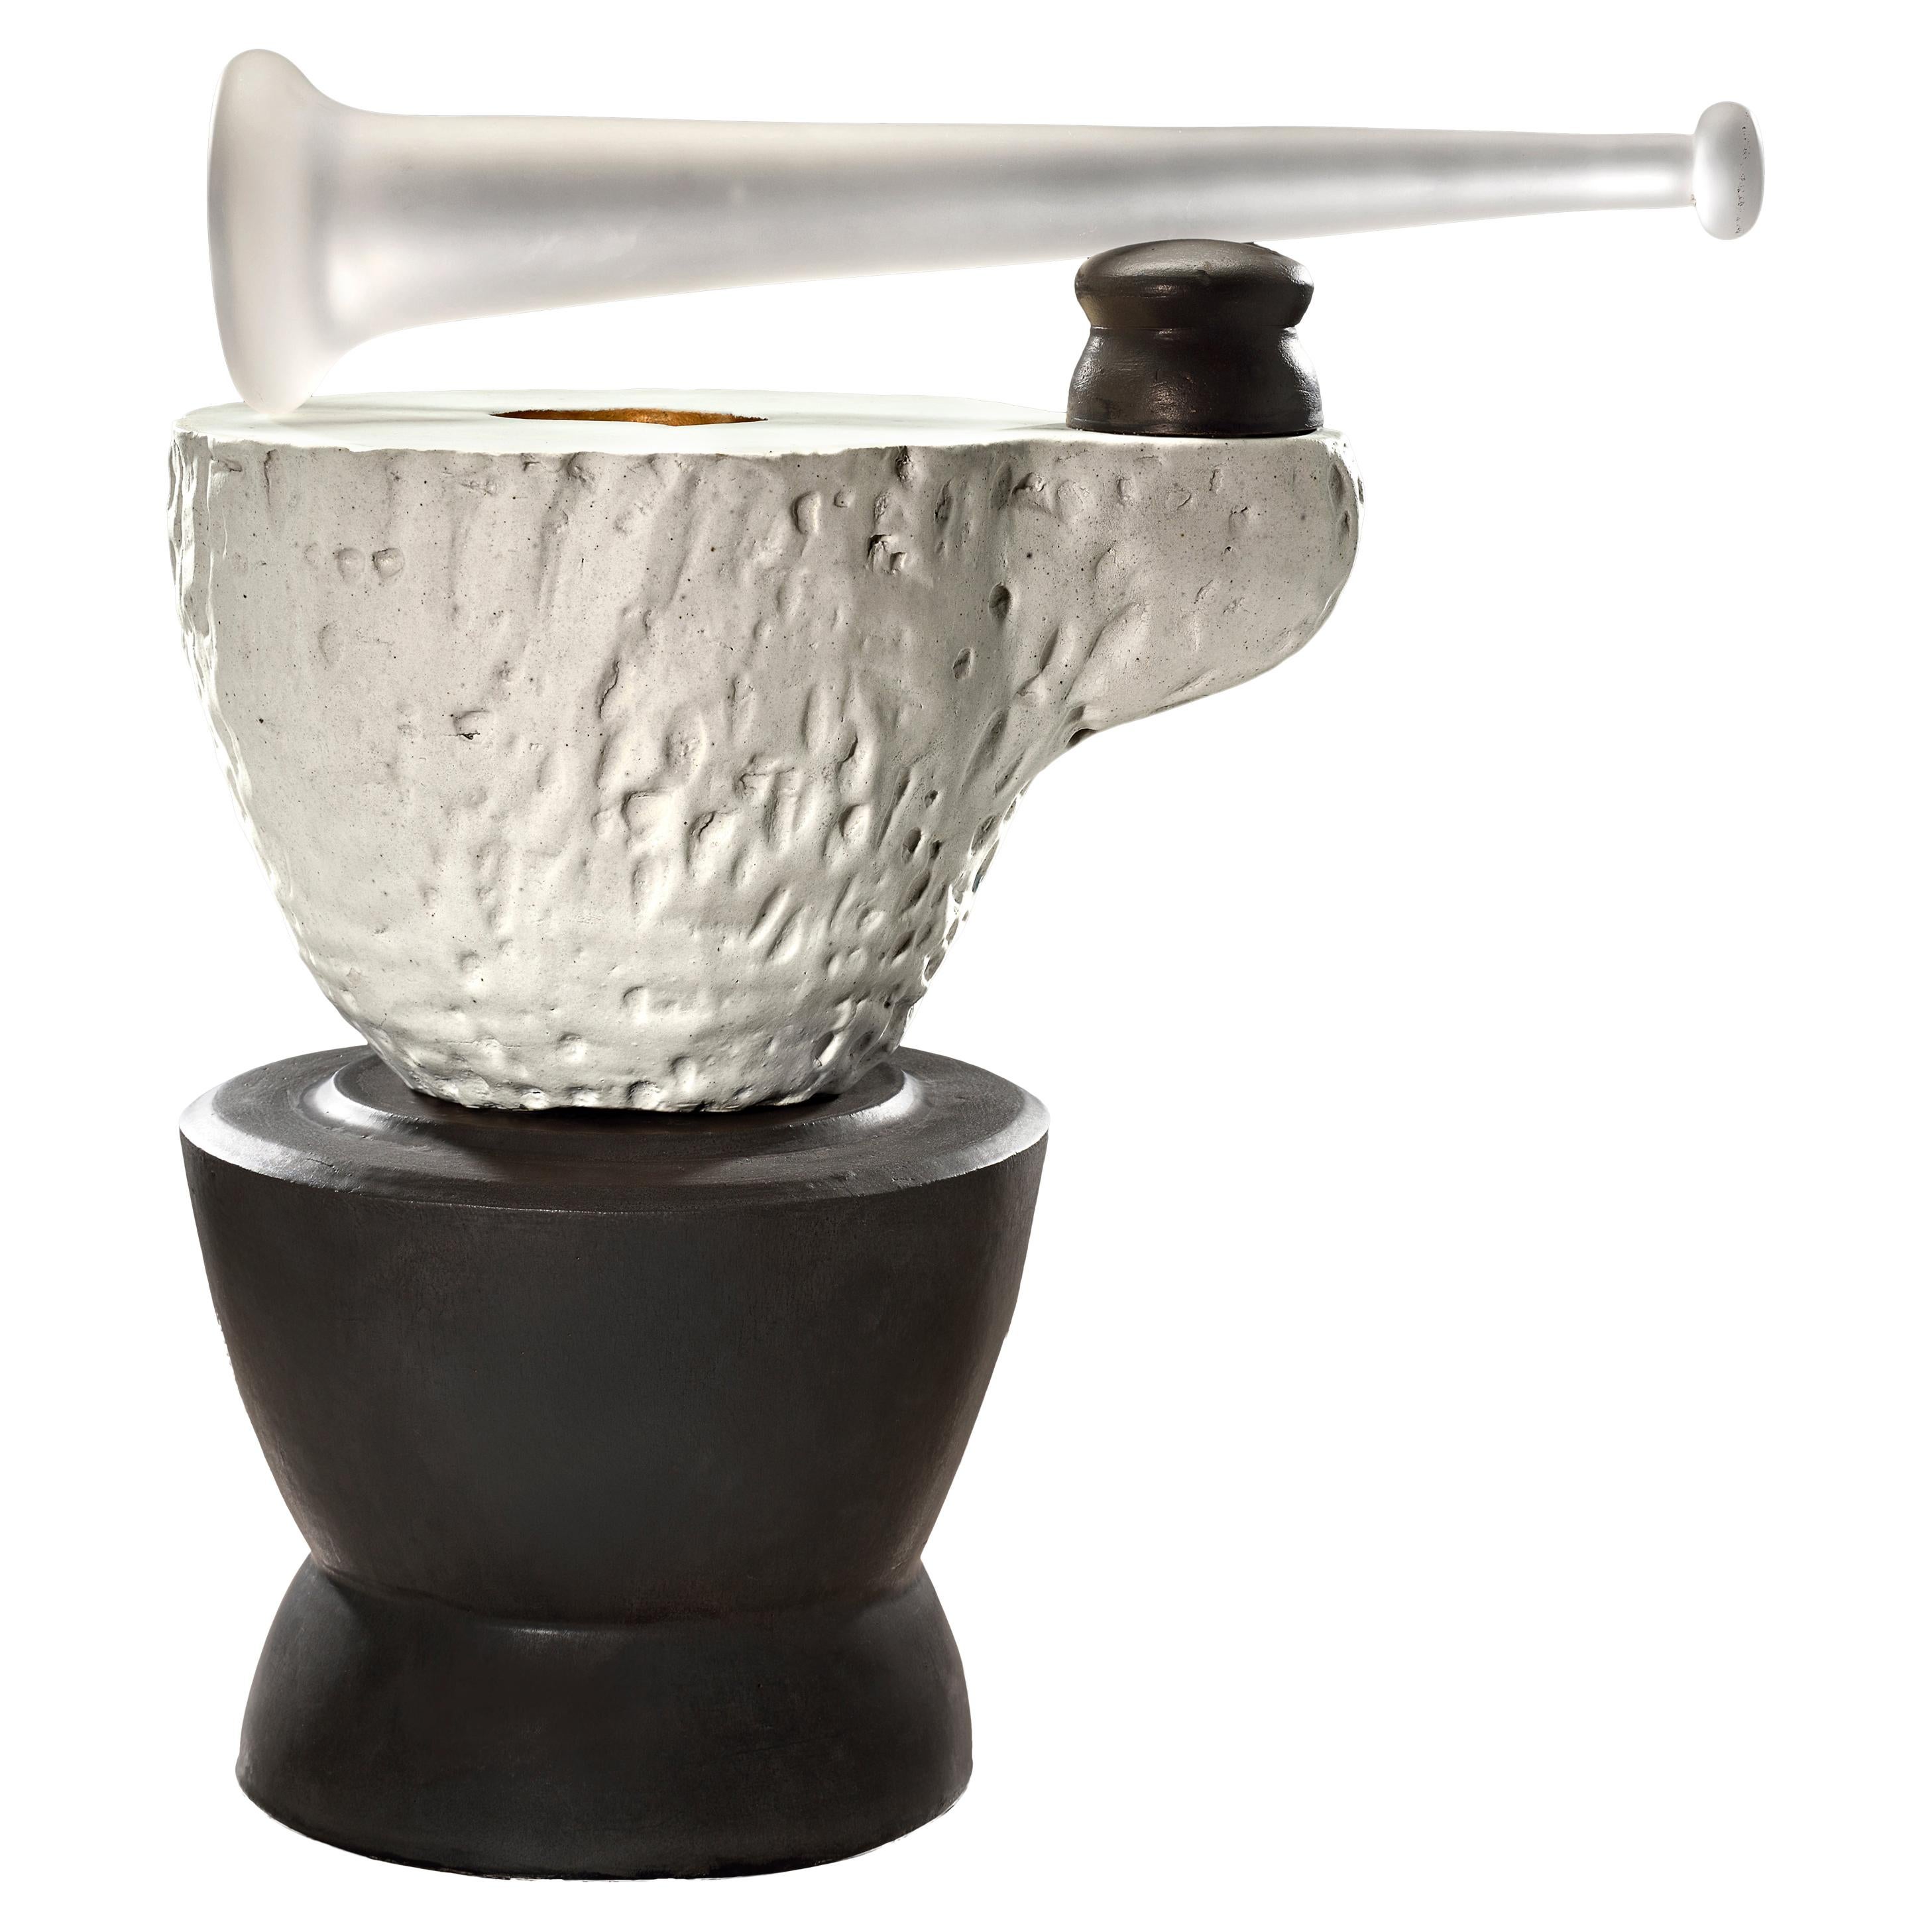 Richard Hirsch Ceramic Mortar and Glass Pestle Sculpture #2, 2020 For Sale